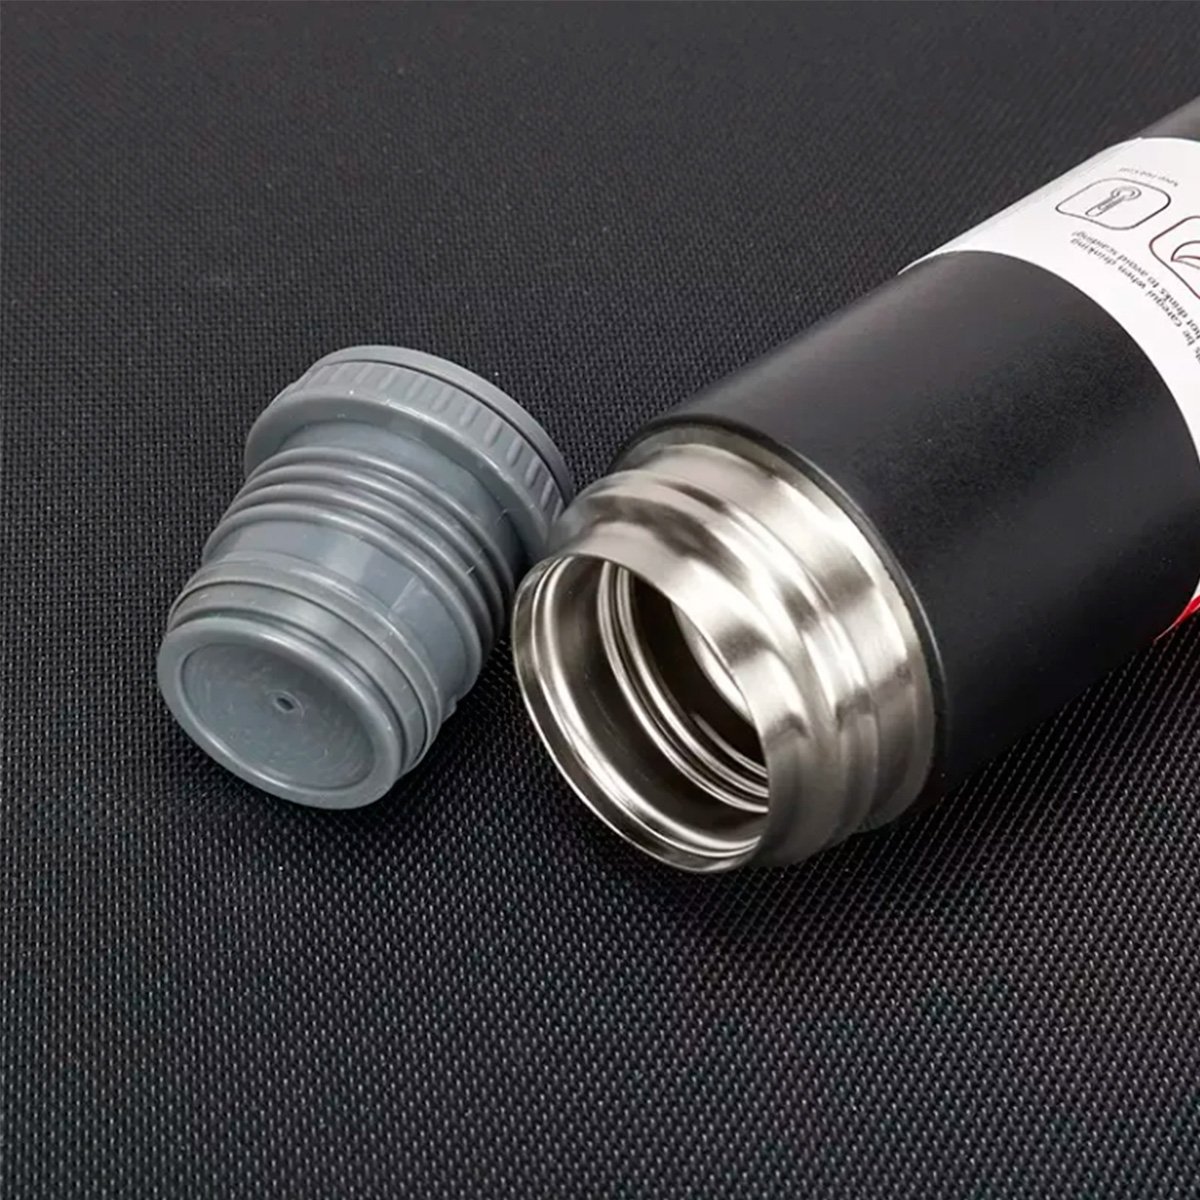 03 kit garrafa termica vacuum flask set 500ml com 3 xicaras